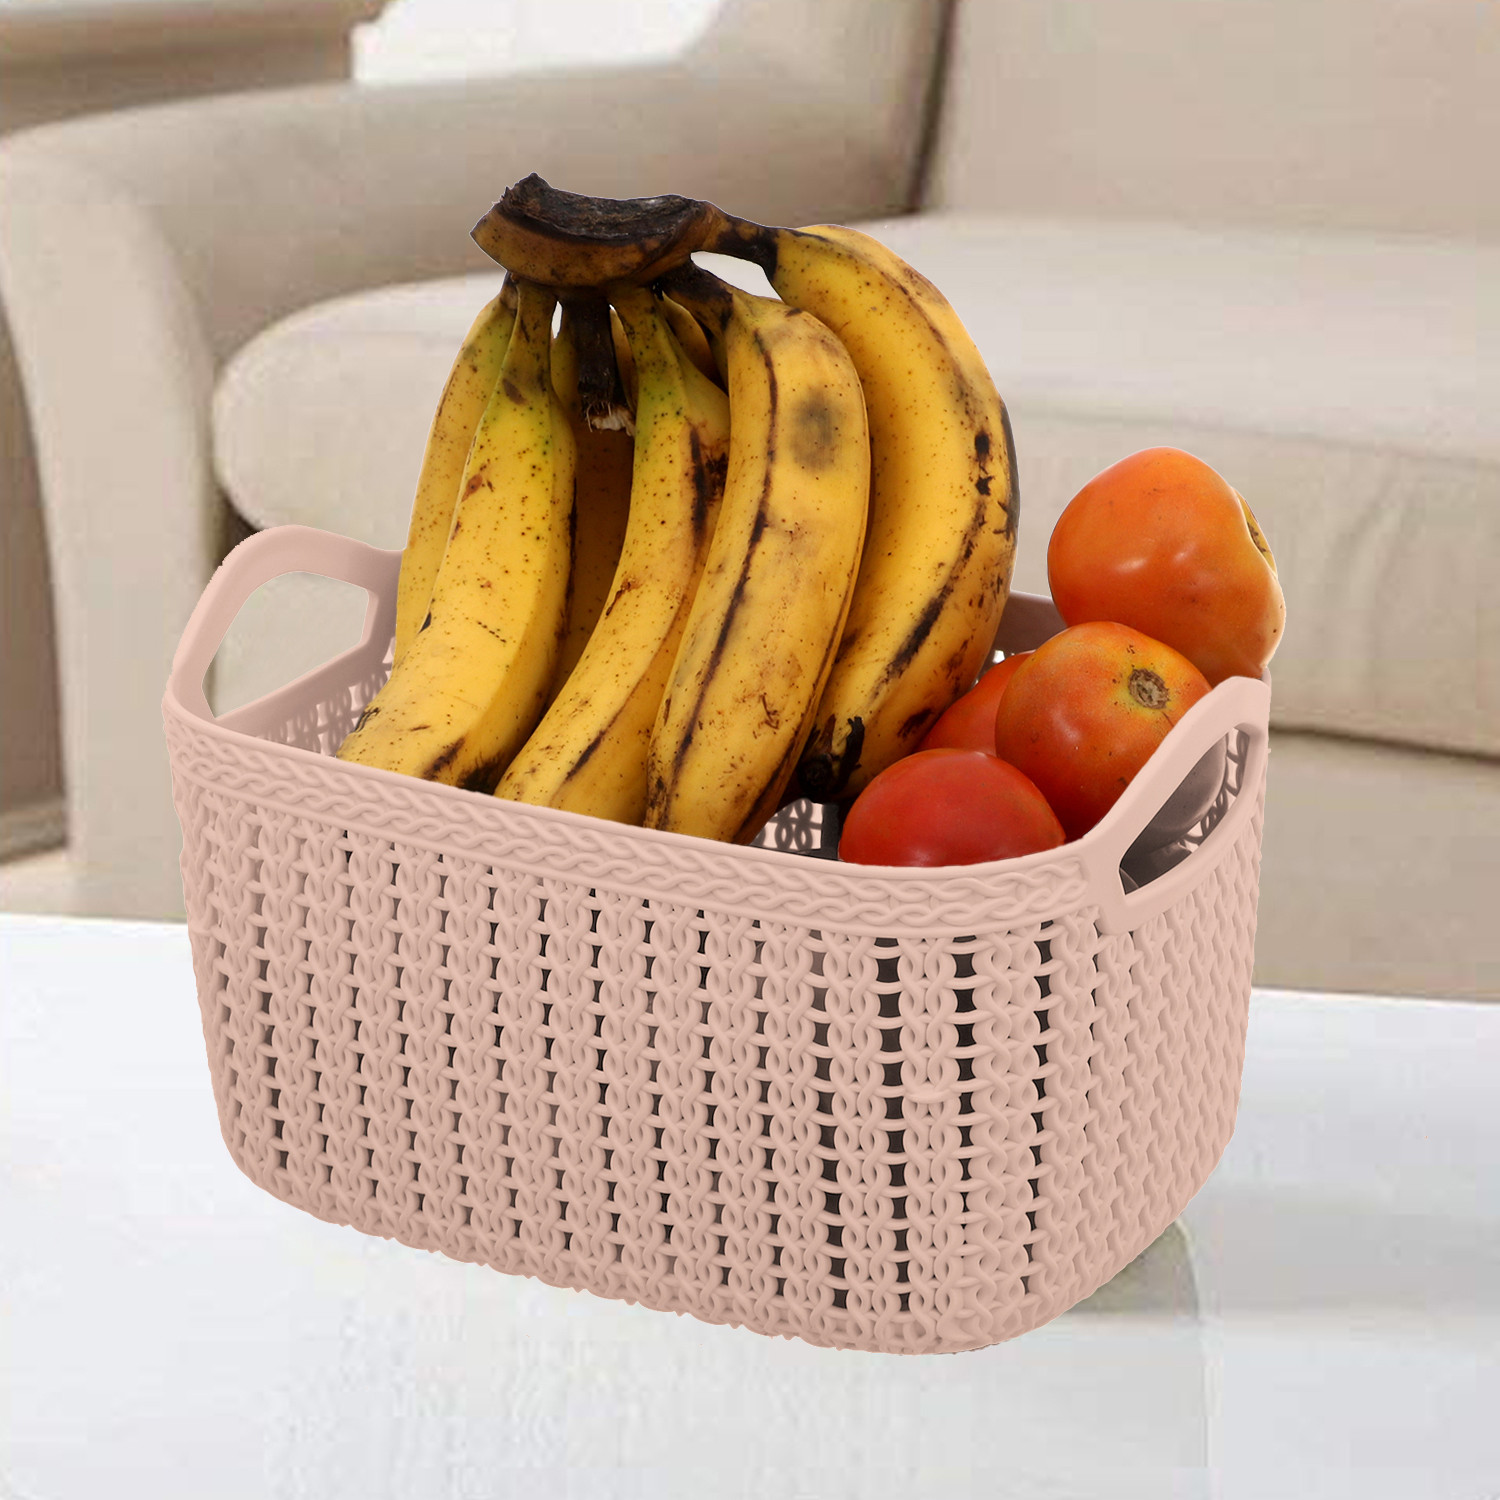 Kuber Industries Unbreakable Plastic Multipurpose Large Size Flexible Storage Baskets / Fruit Vegetable Bathroom Stationary Home Basket with Handles (Peach & Grey) -CTKTC37845